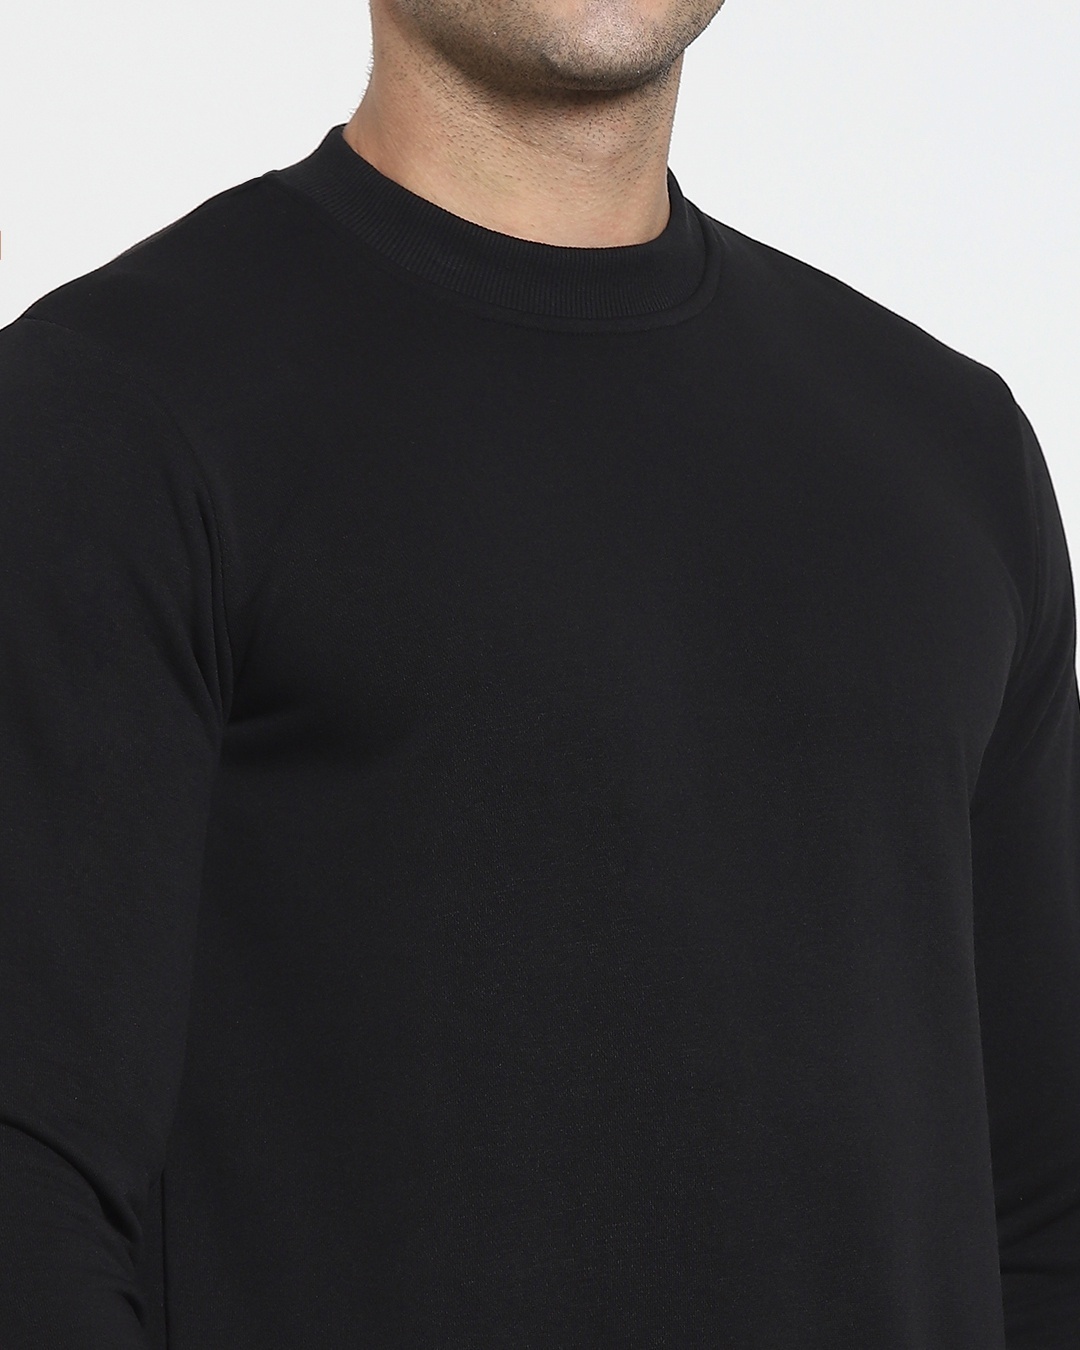 Shop Men's Crewneck Solid Black Sweatshirt